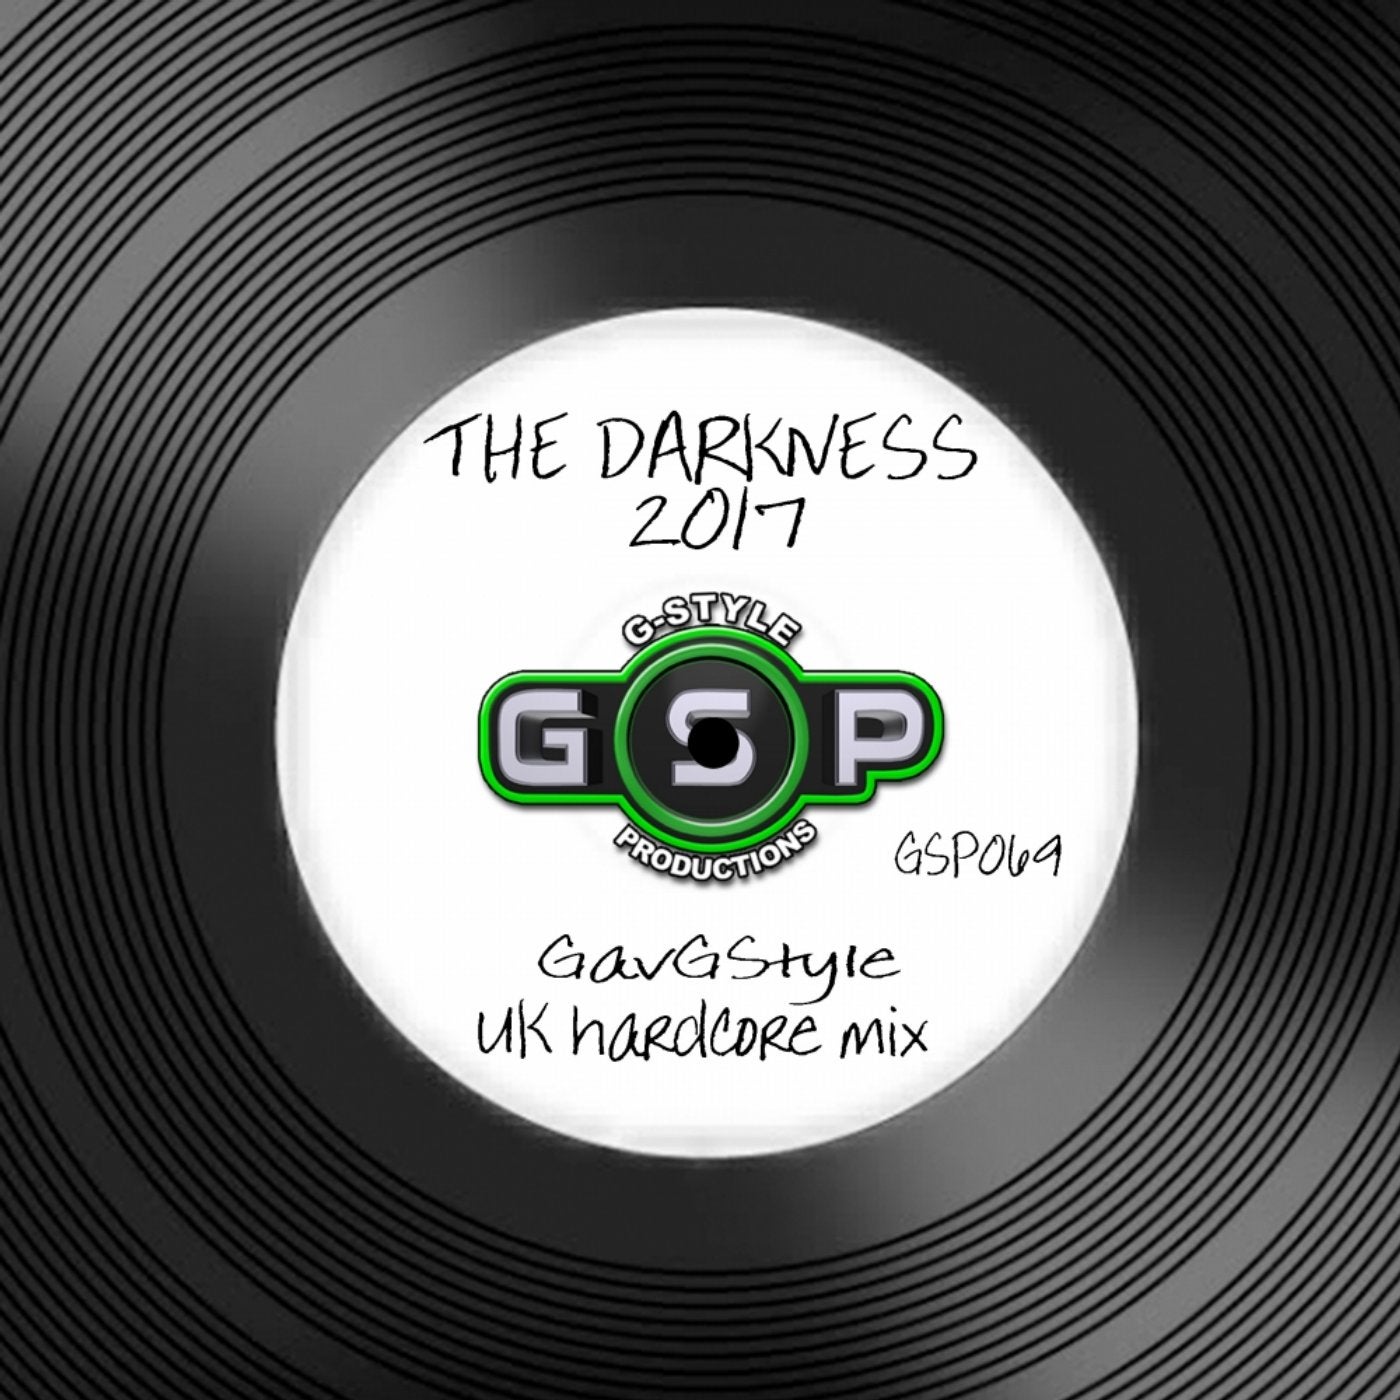 The Darkness 2017 (UK Hardcore Mix)